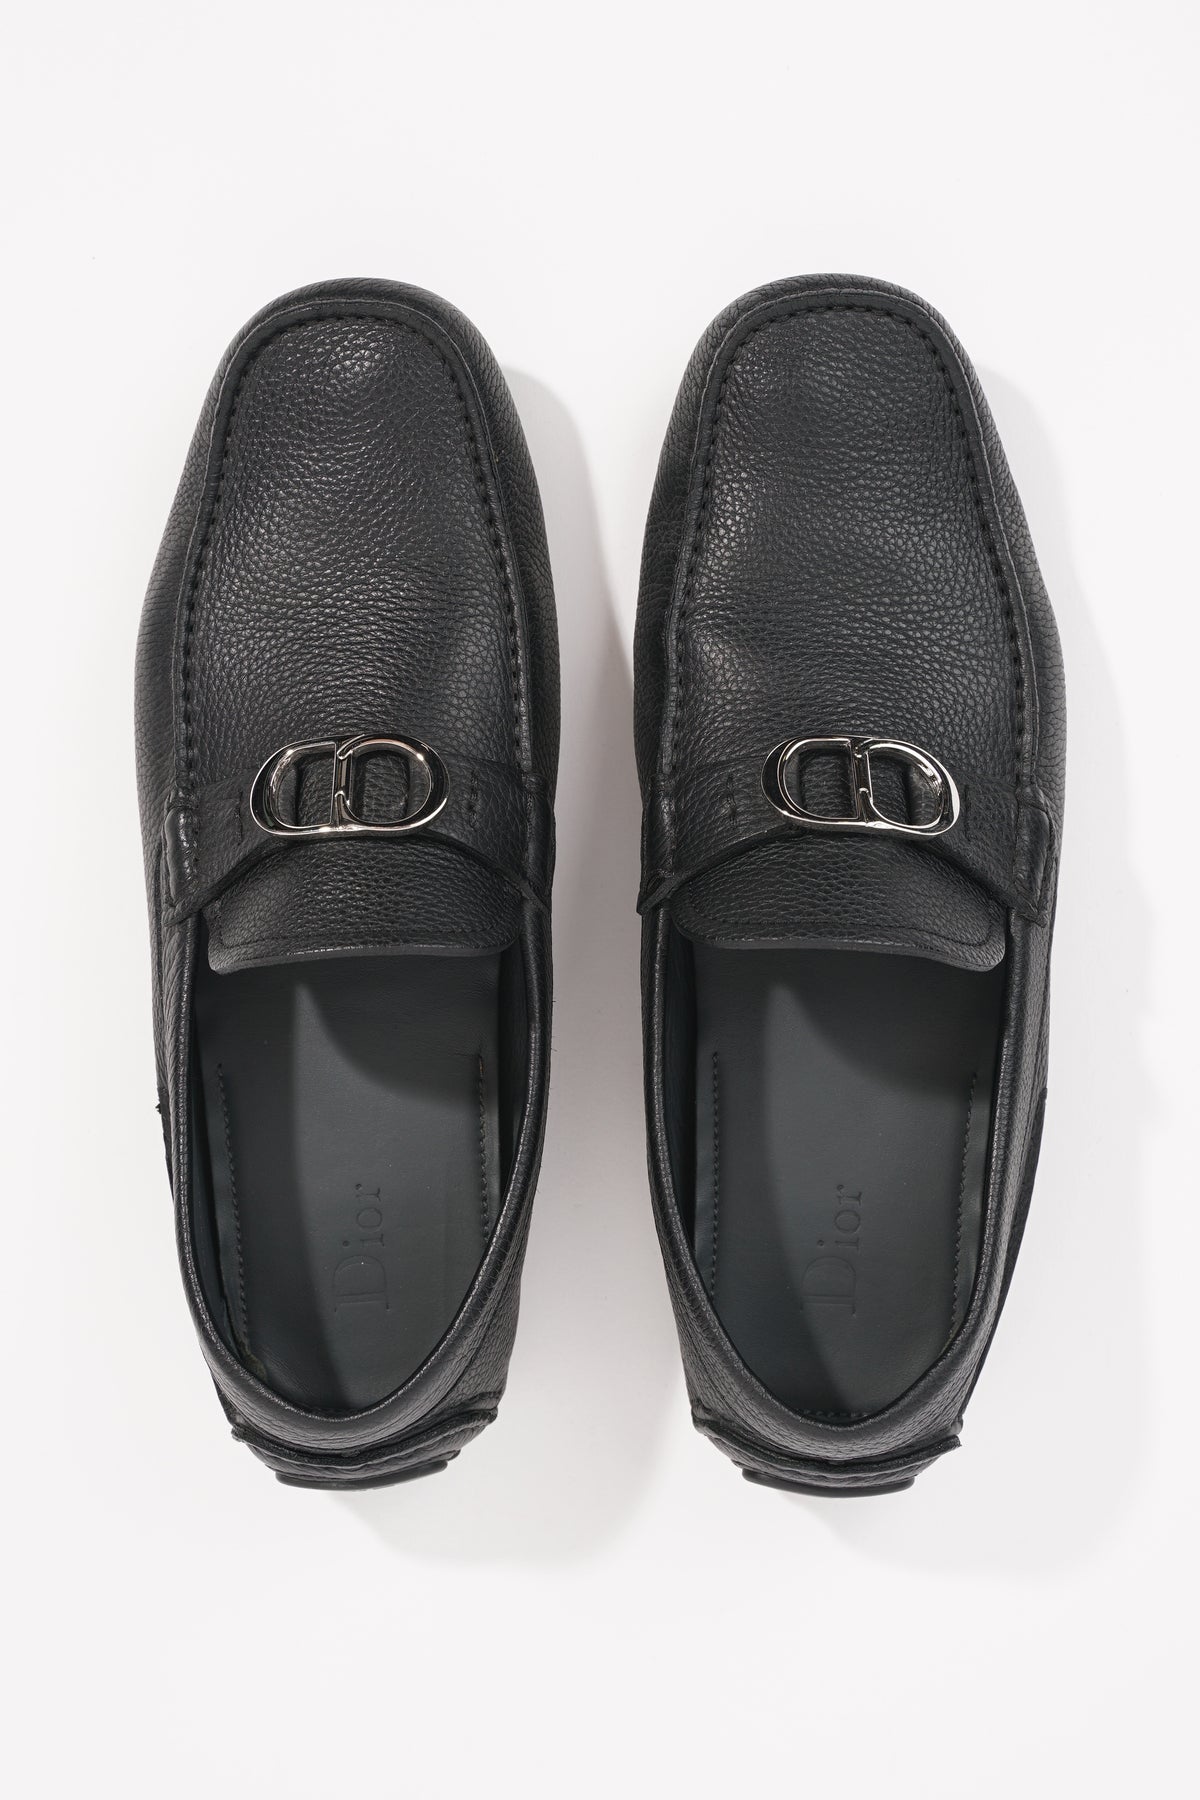 Christian Dior Men's Loafers & Slip-Ons